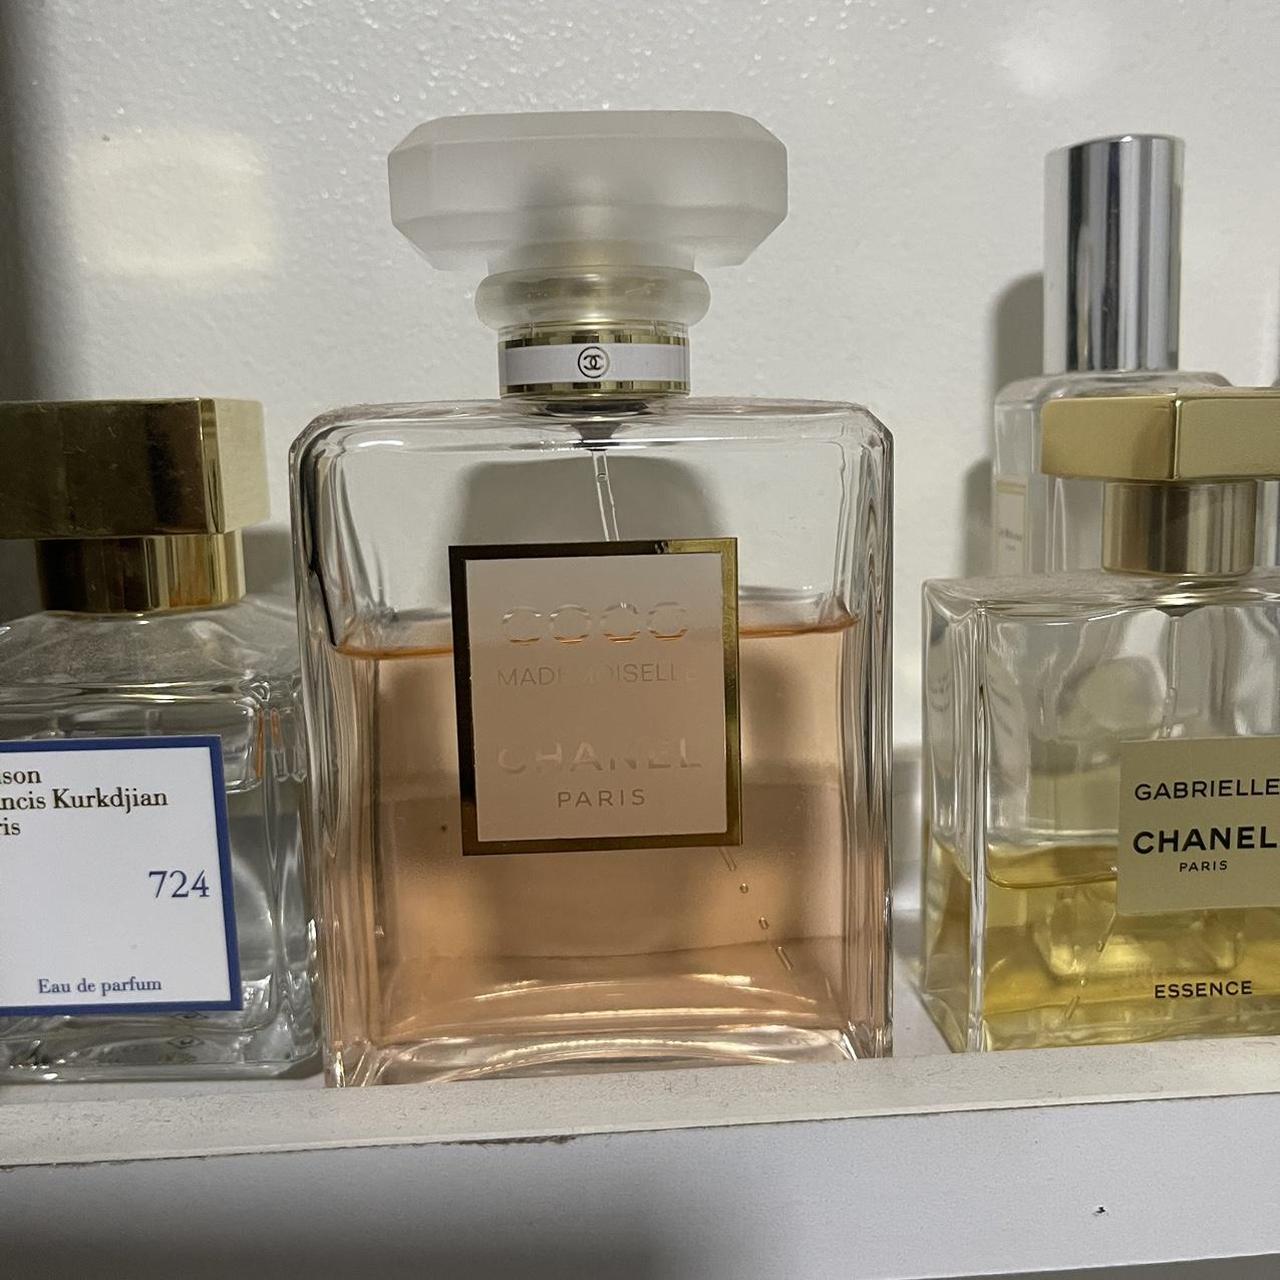 CHANEL Coco Noir Fragrances for Women for sale